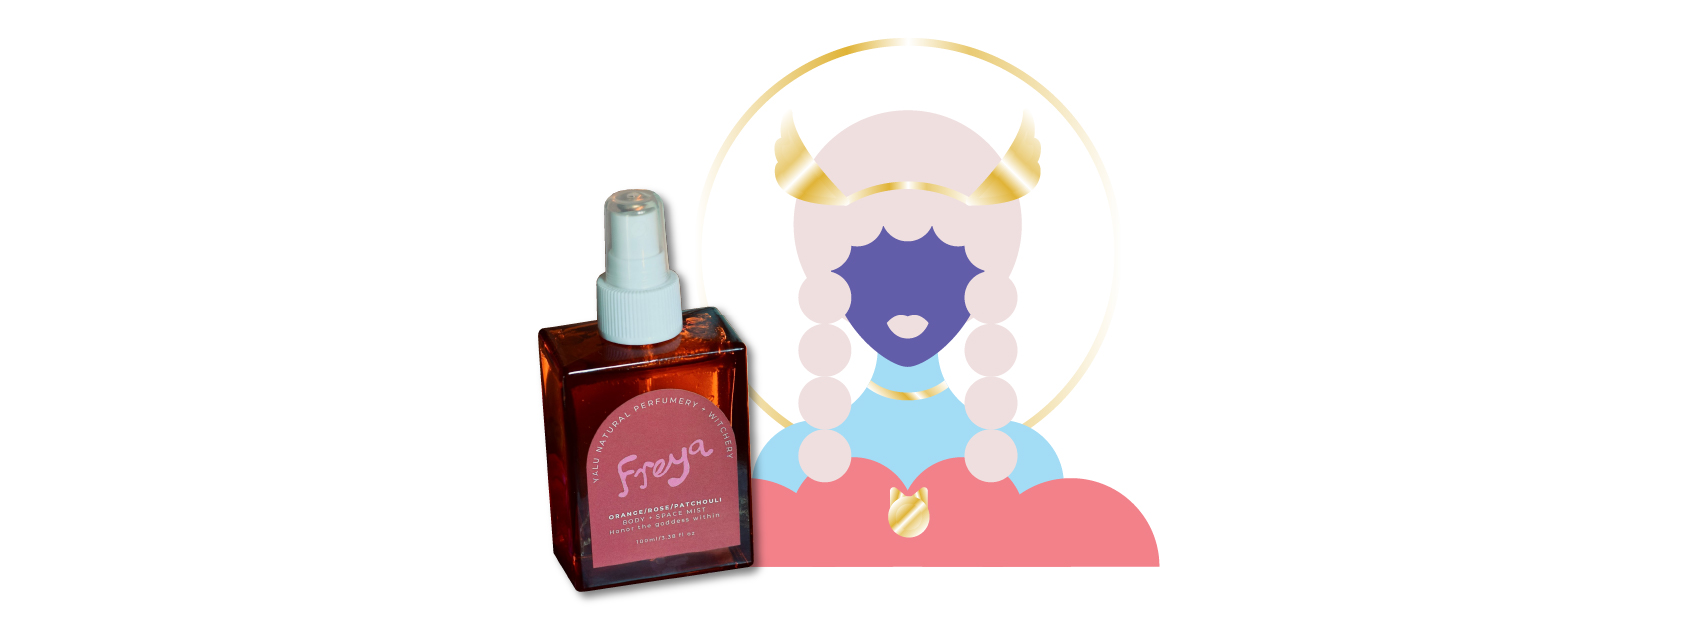 bottle of freya mist by yalu with an illustration of freya the goddess